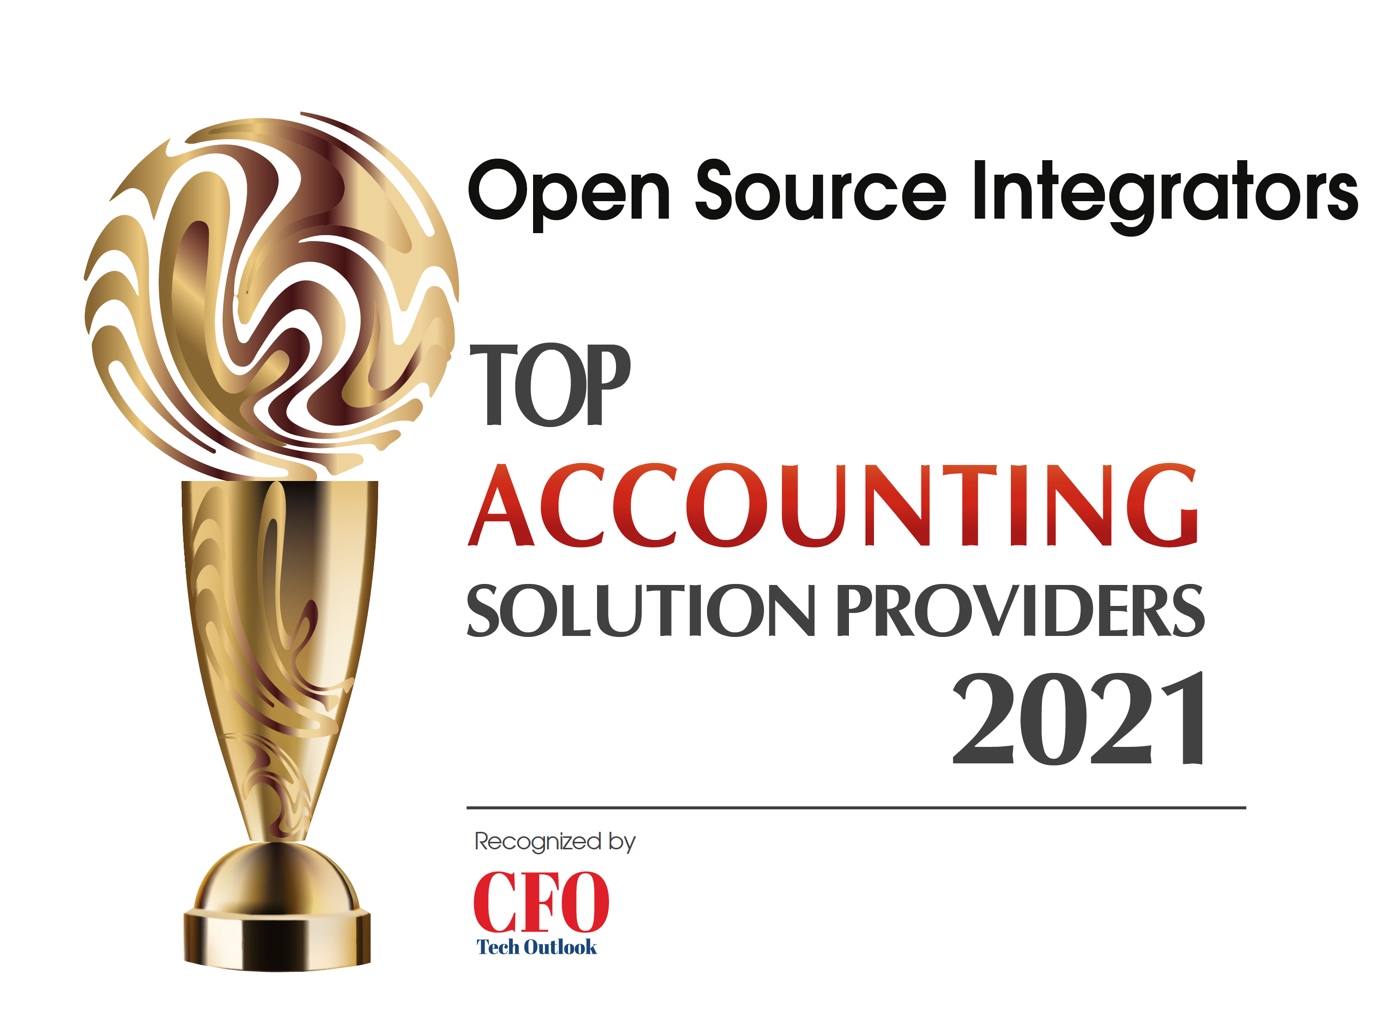 "Top 10 Accounting Solution Providers" award logo